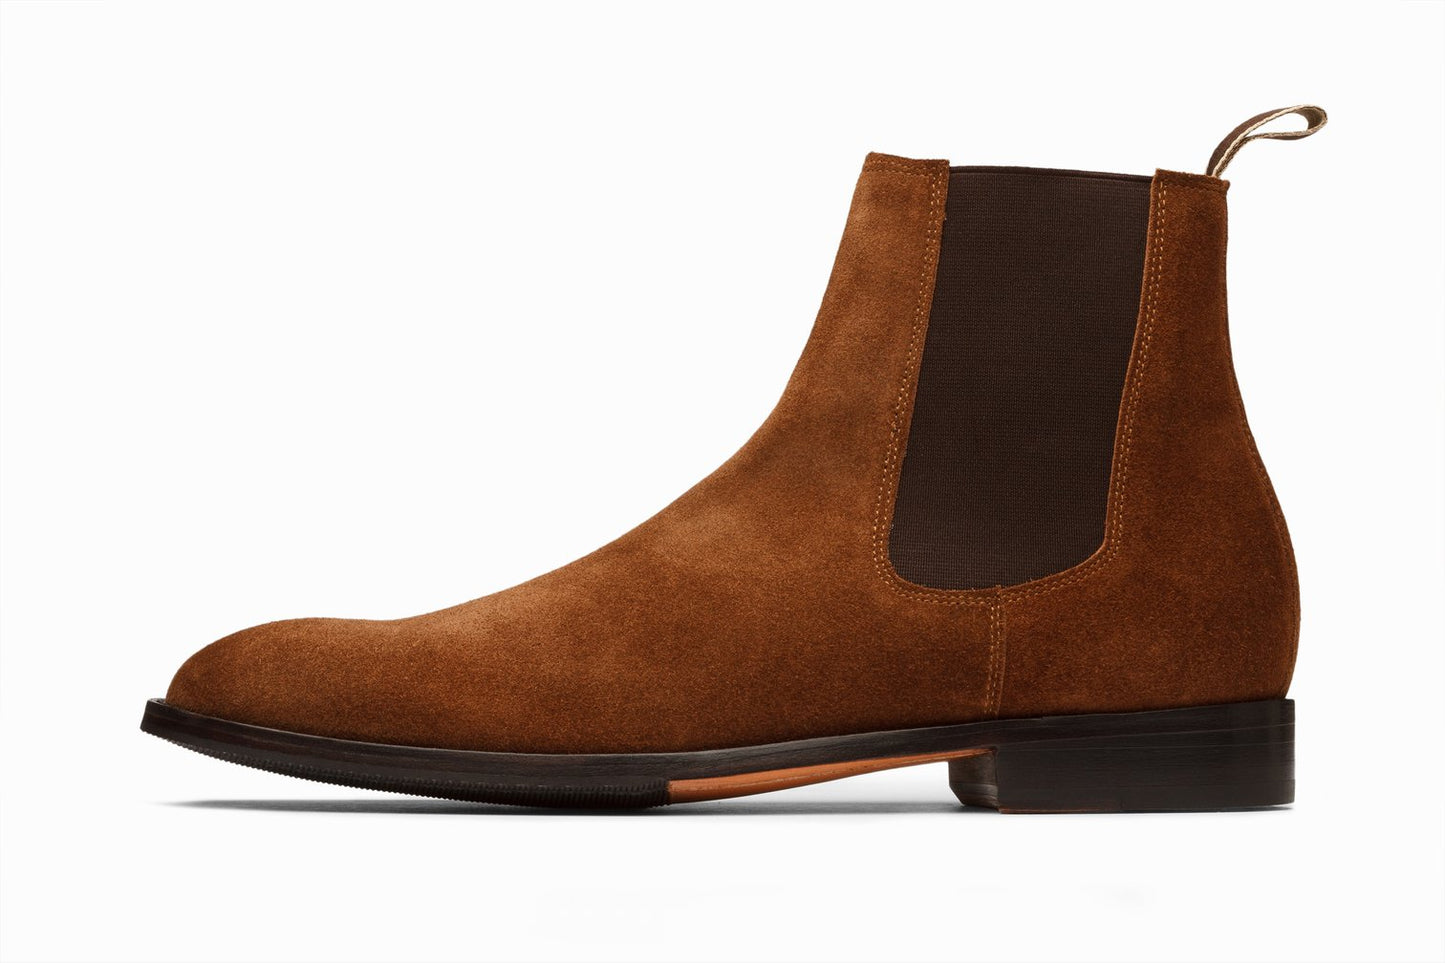 Chelsea boot cognac suede, leather shoes for men in Dubai.